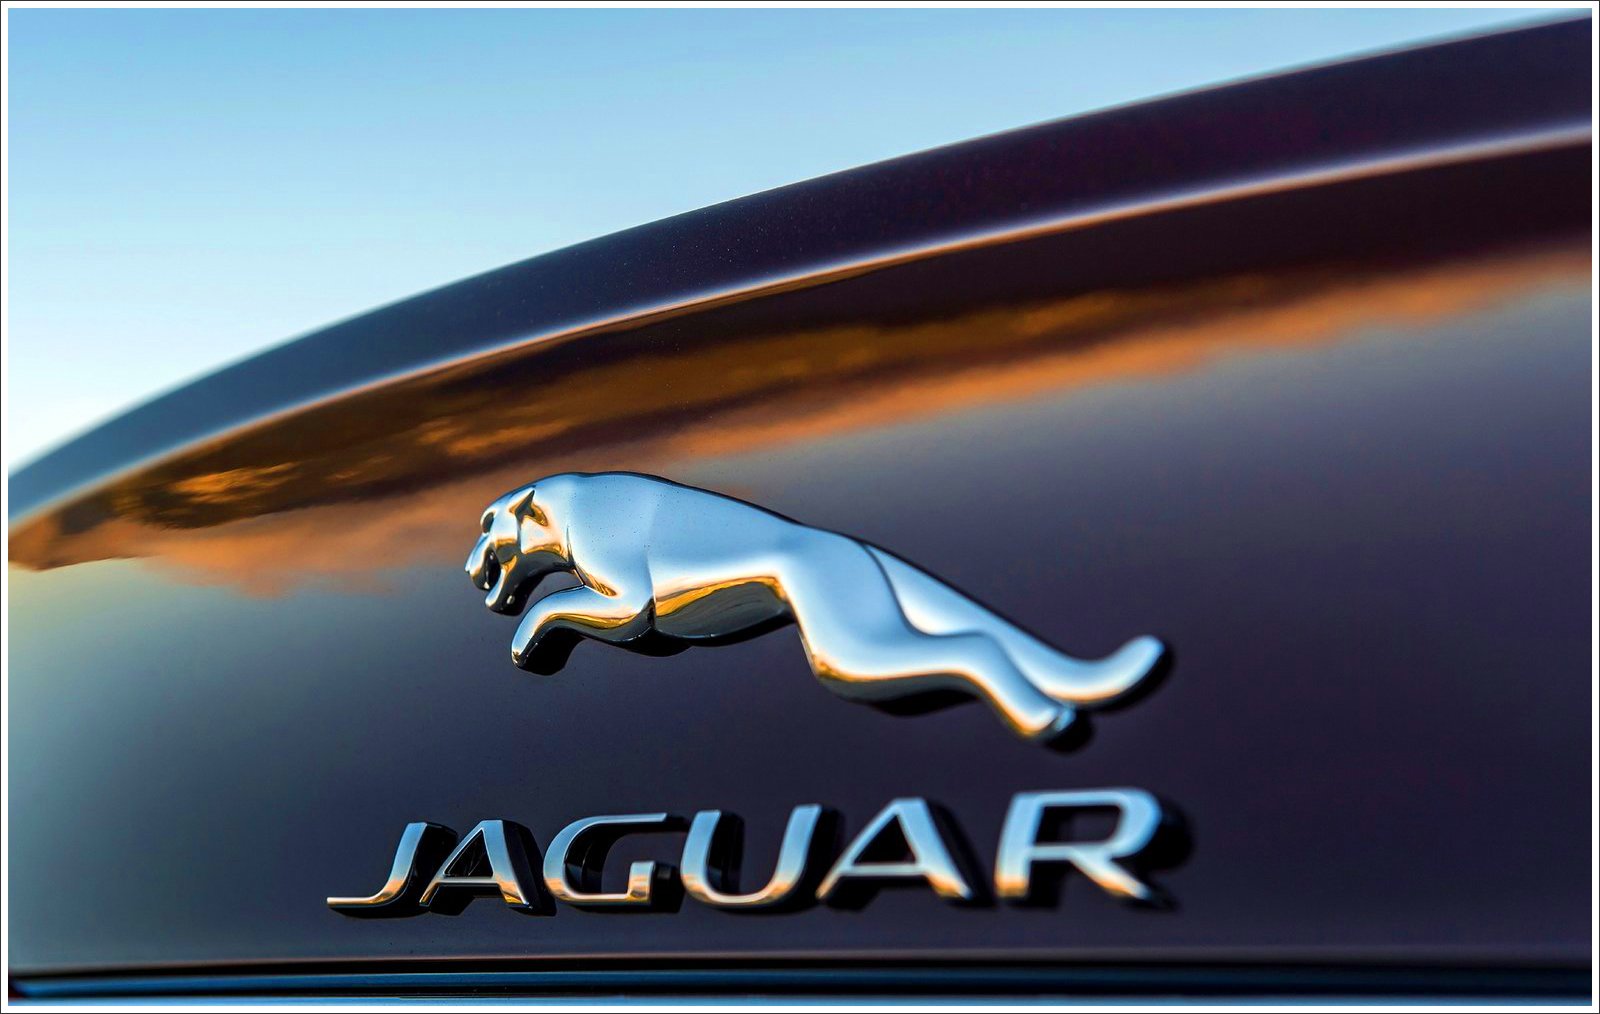 Jaguar Logo Meaning and History, latest models | World Cars Brands